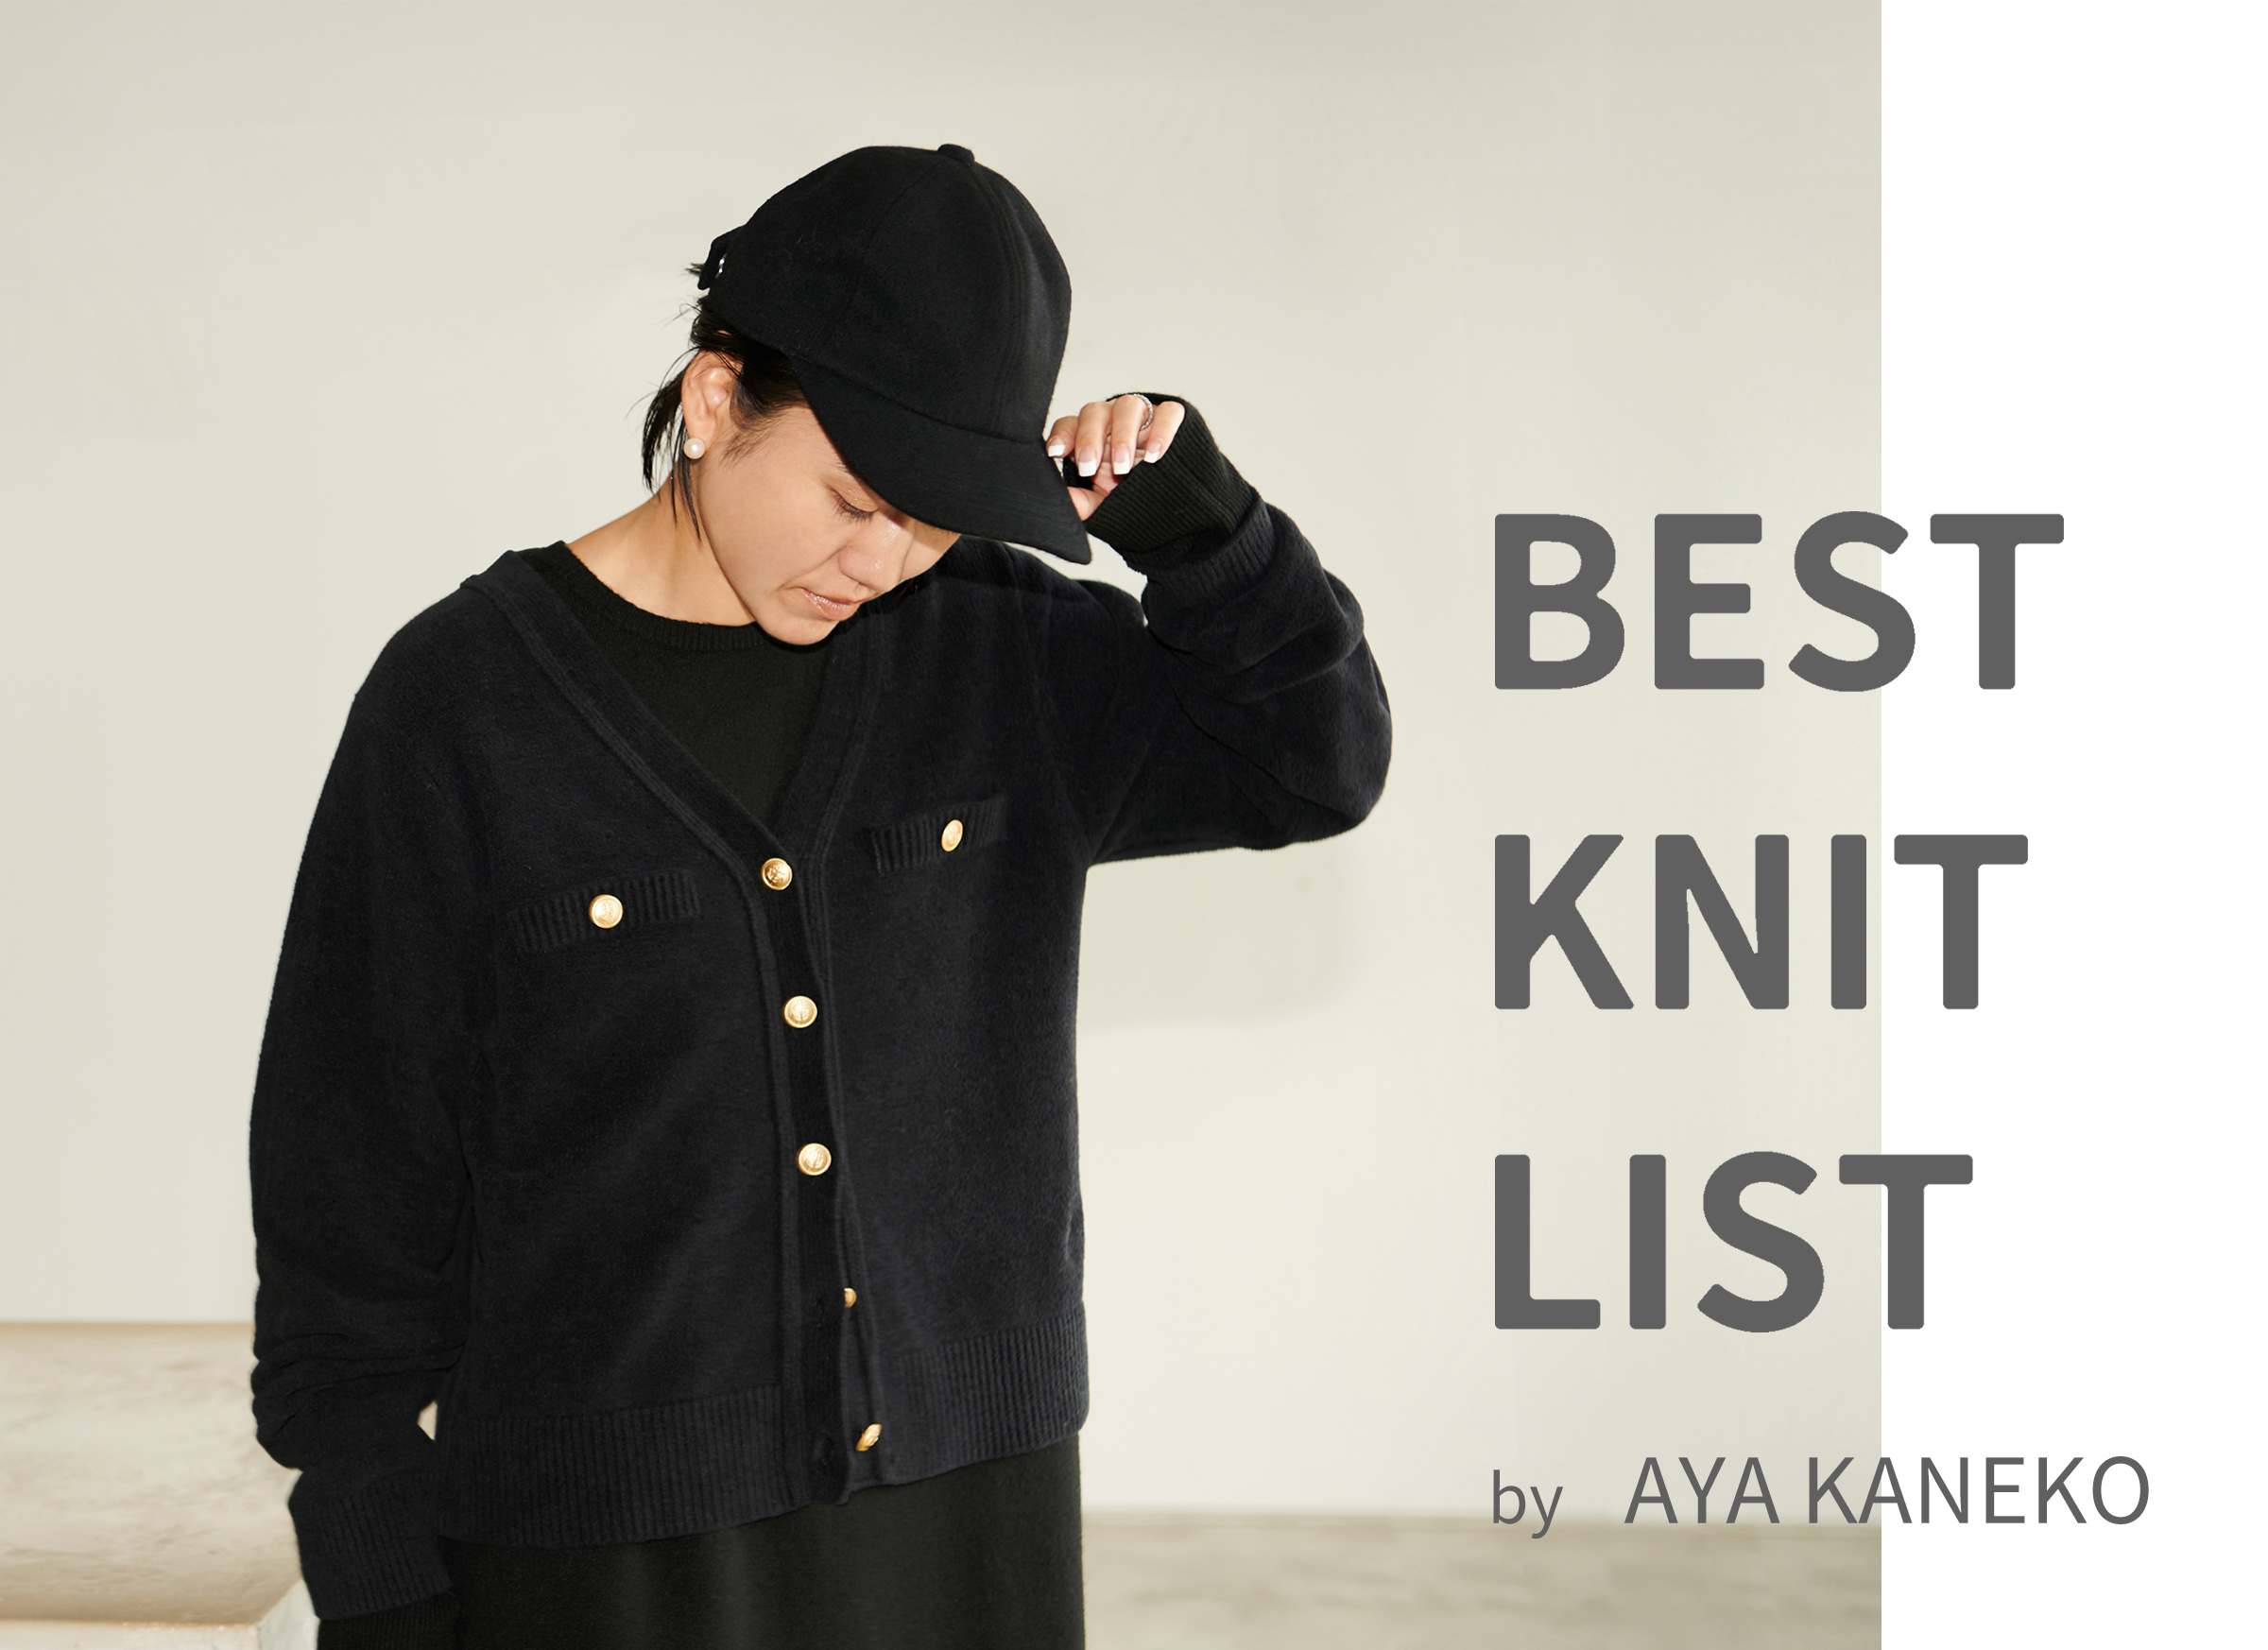 BEST KNIT LIST by AYA KANEKO